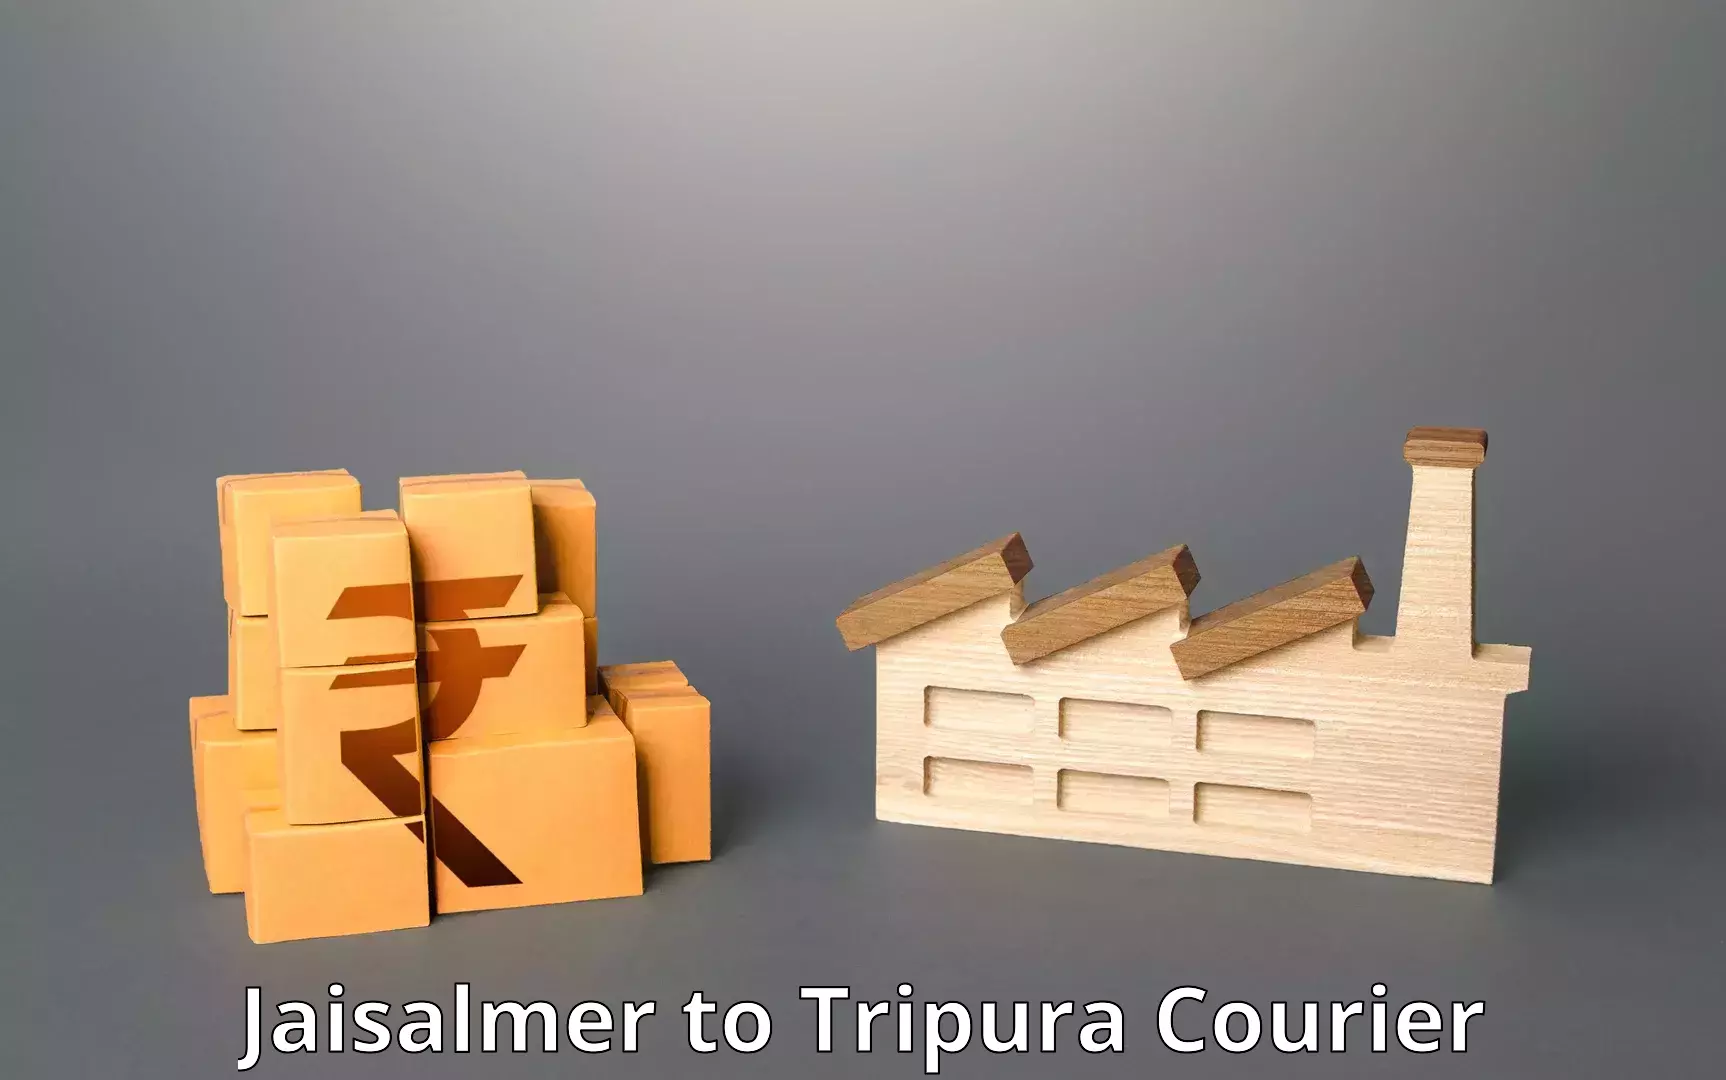 Digital courier platforms Jaisalmer to Udaipur Tripura